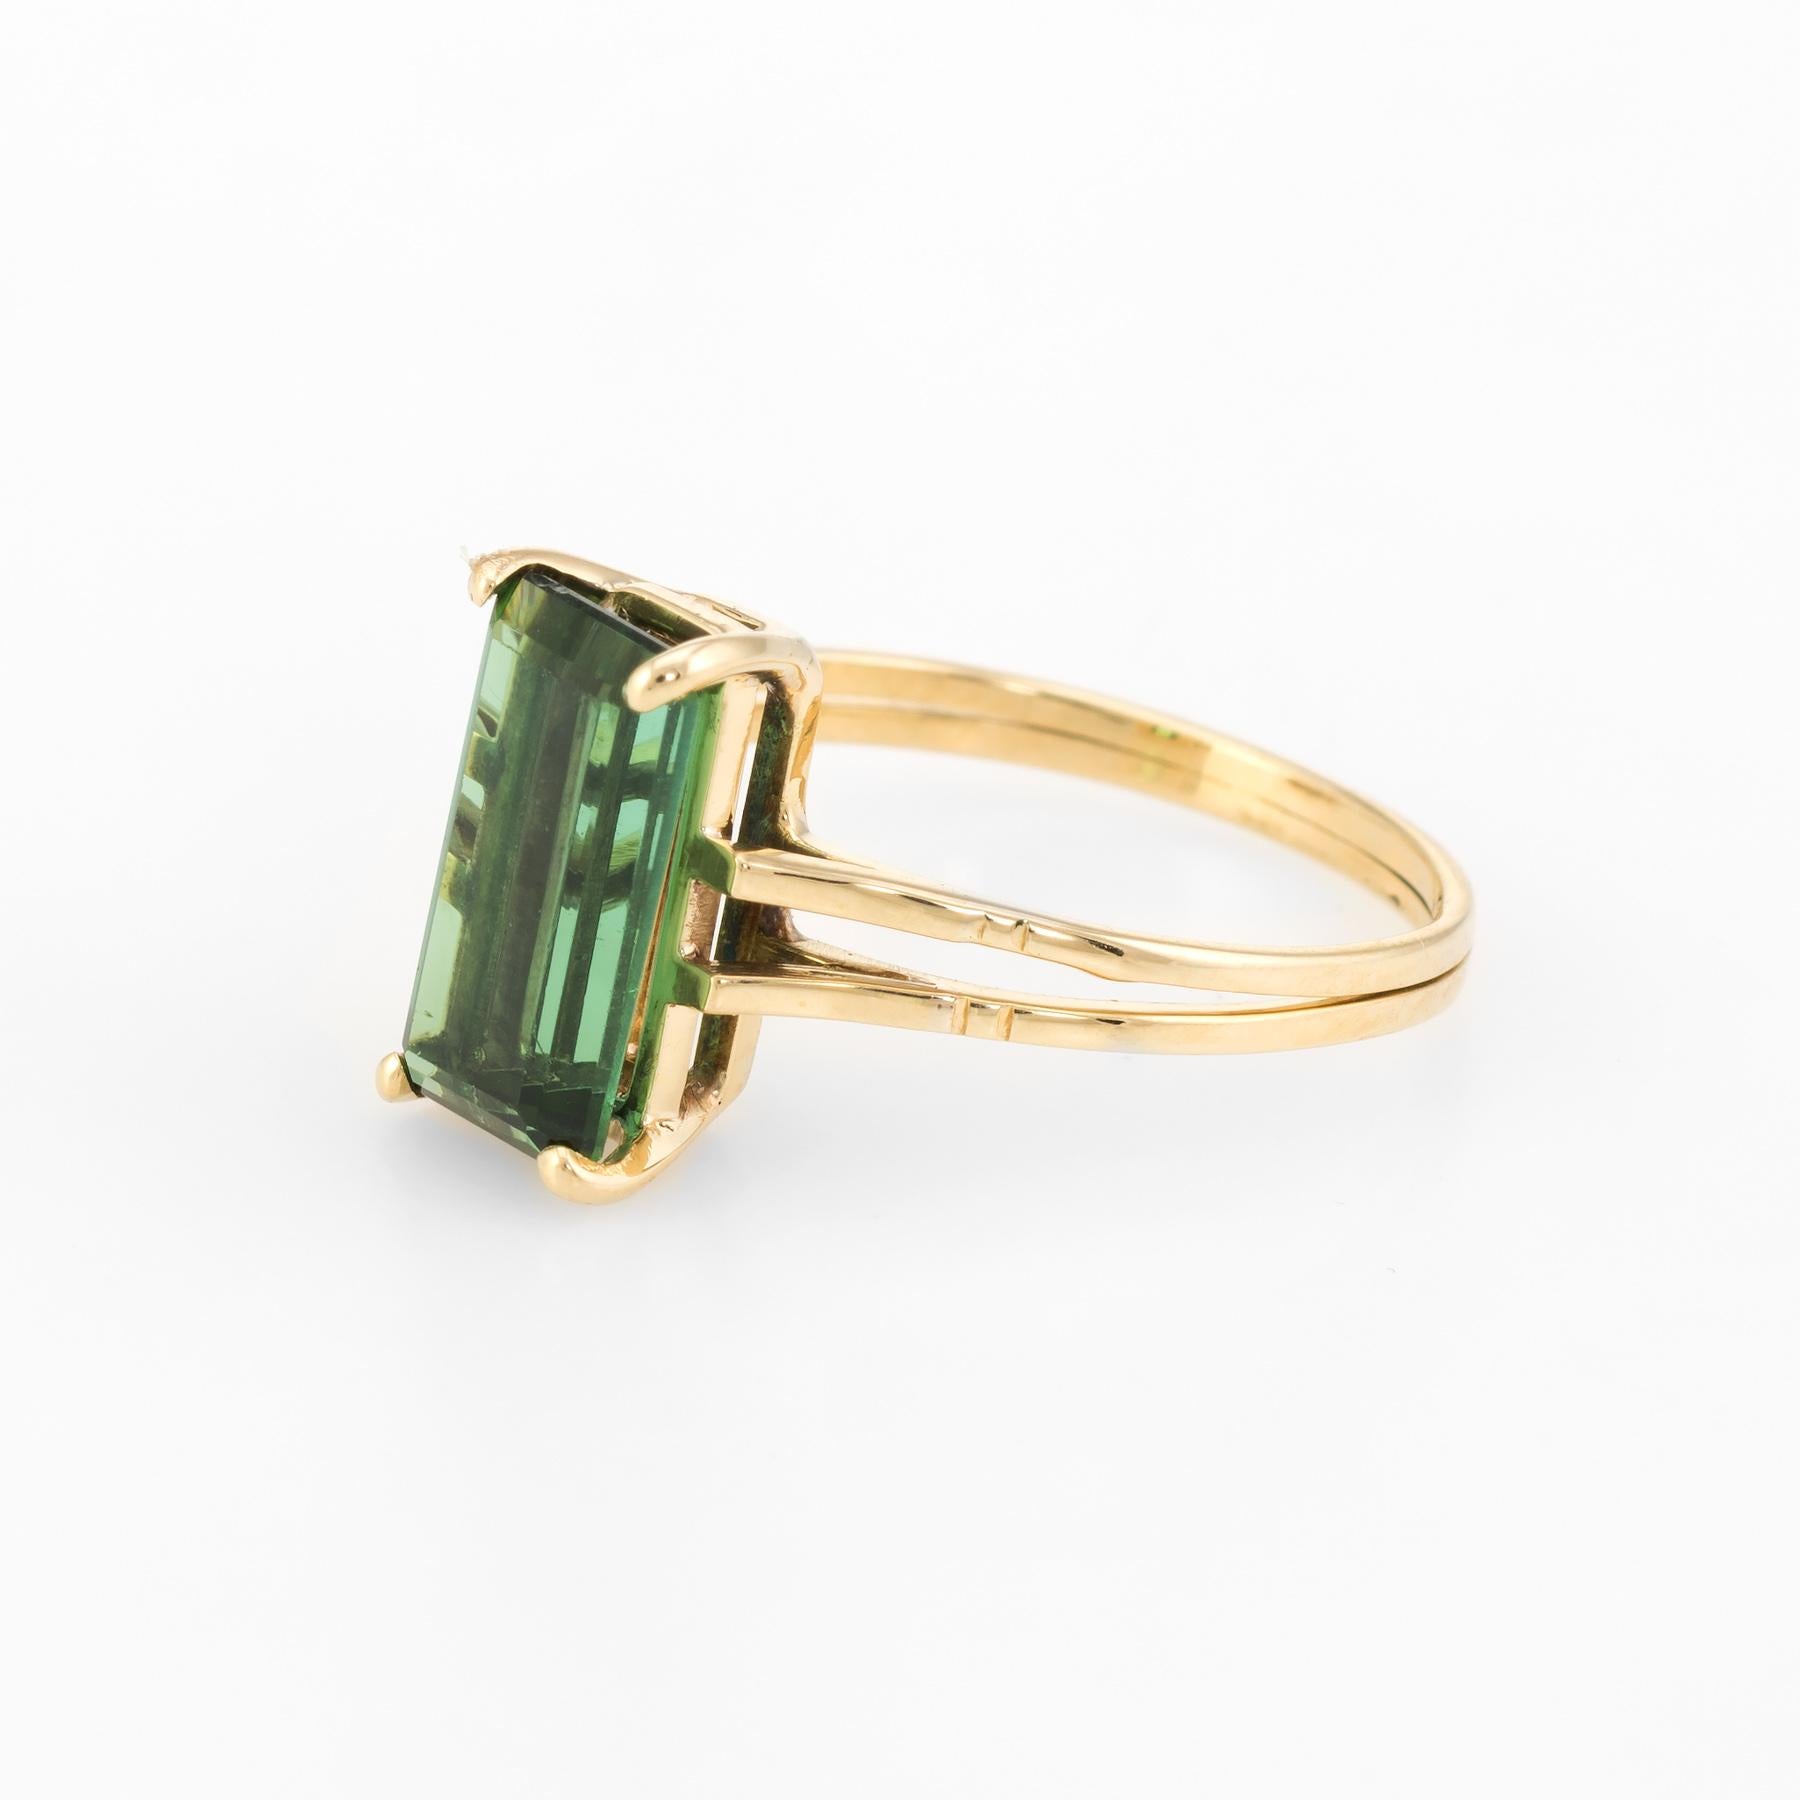 Emerald Cut Green Tourmaline Small Cocktail Ring Vintage 18 Karat Gold Estate Fine Jewelry